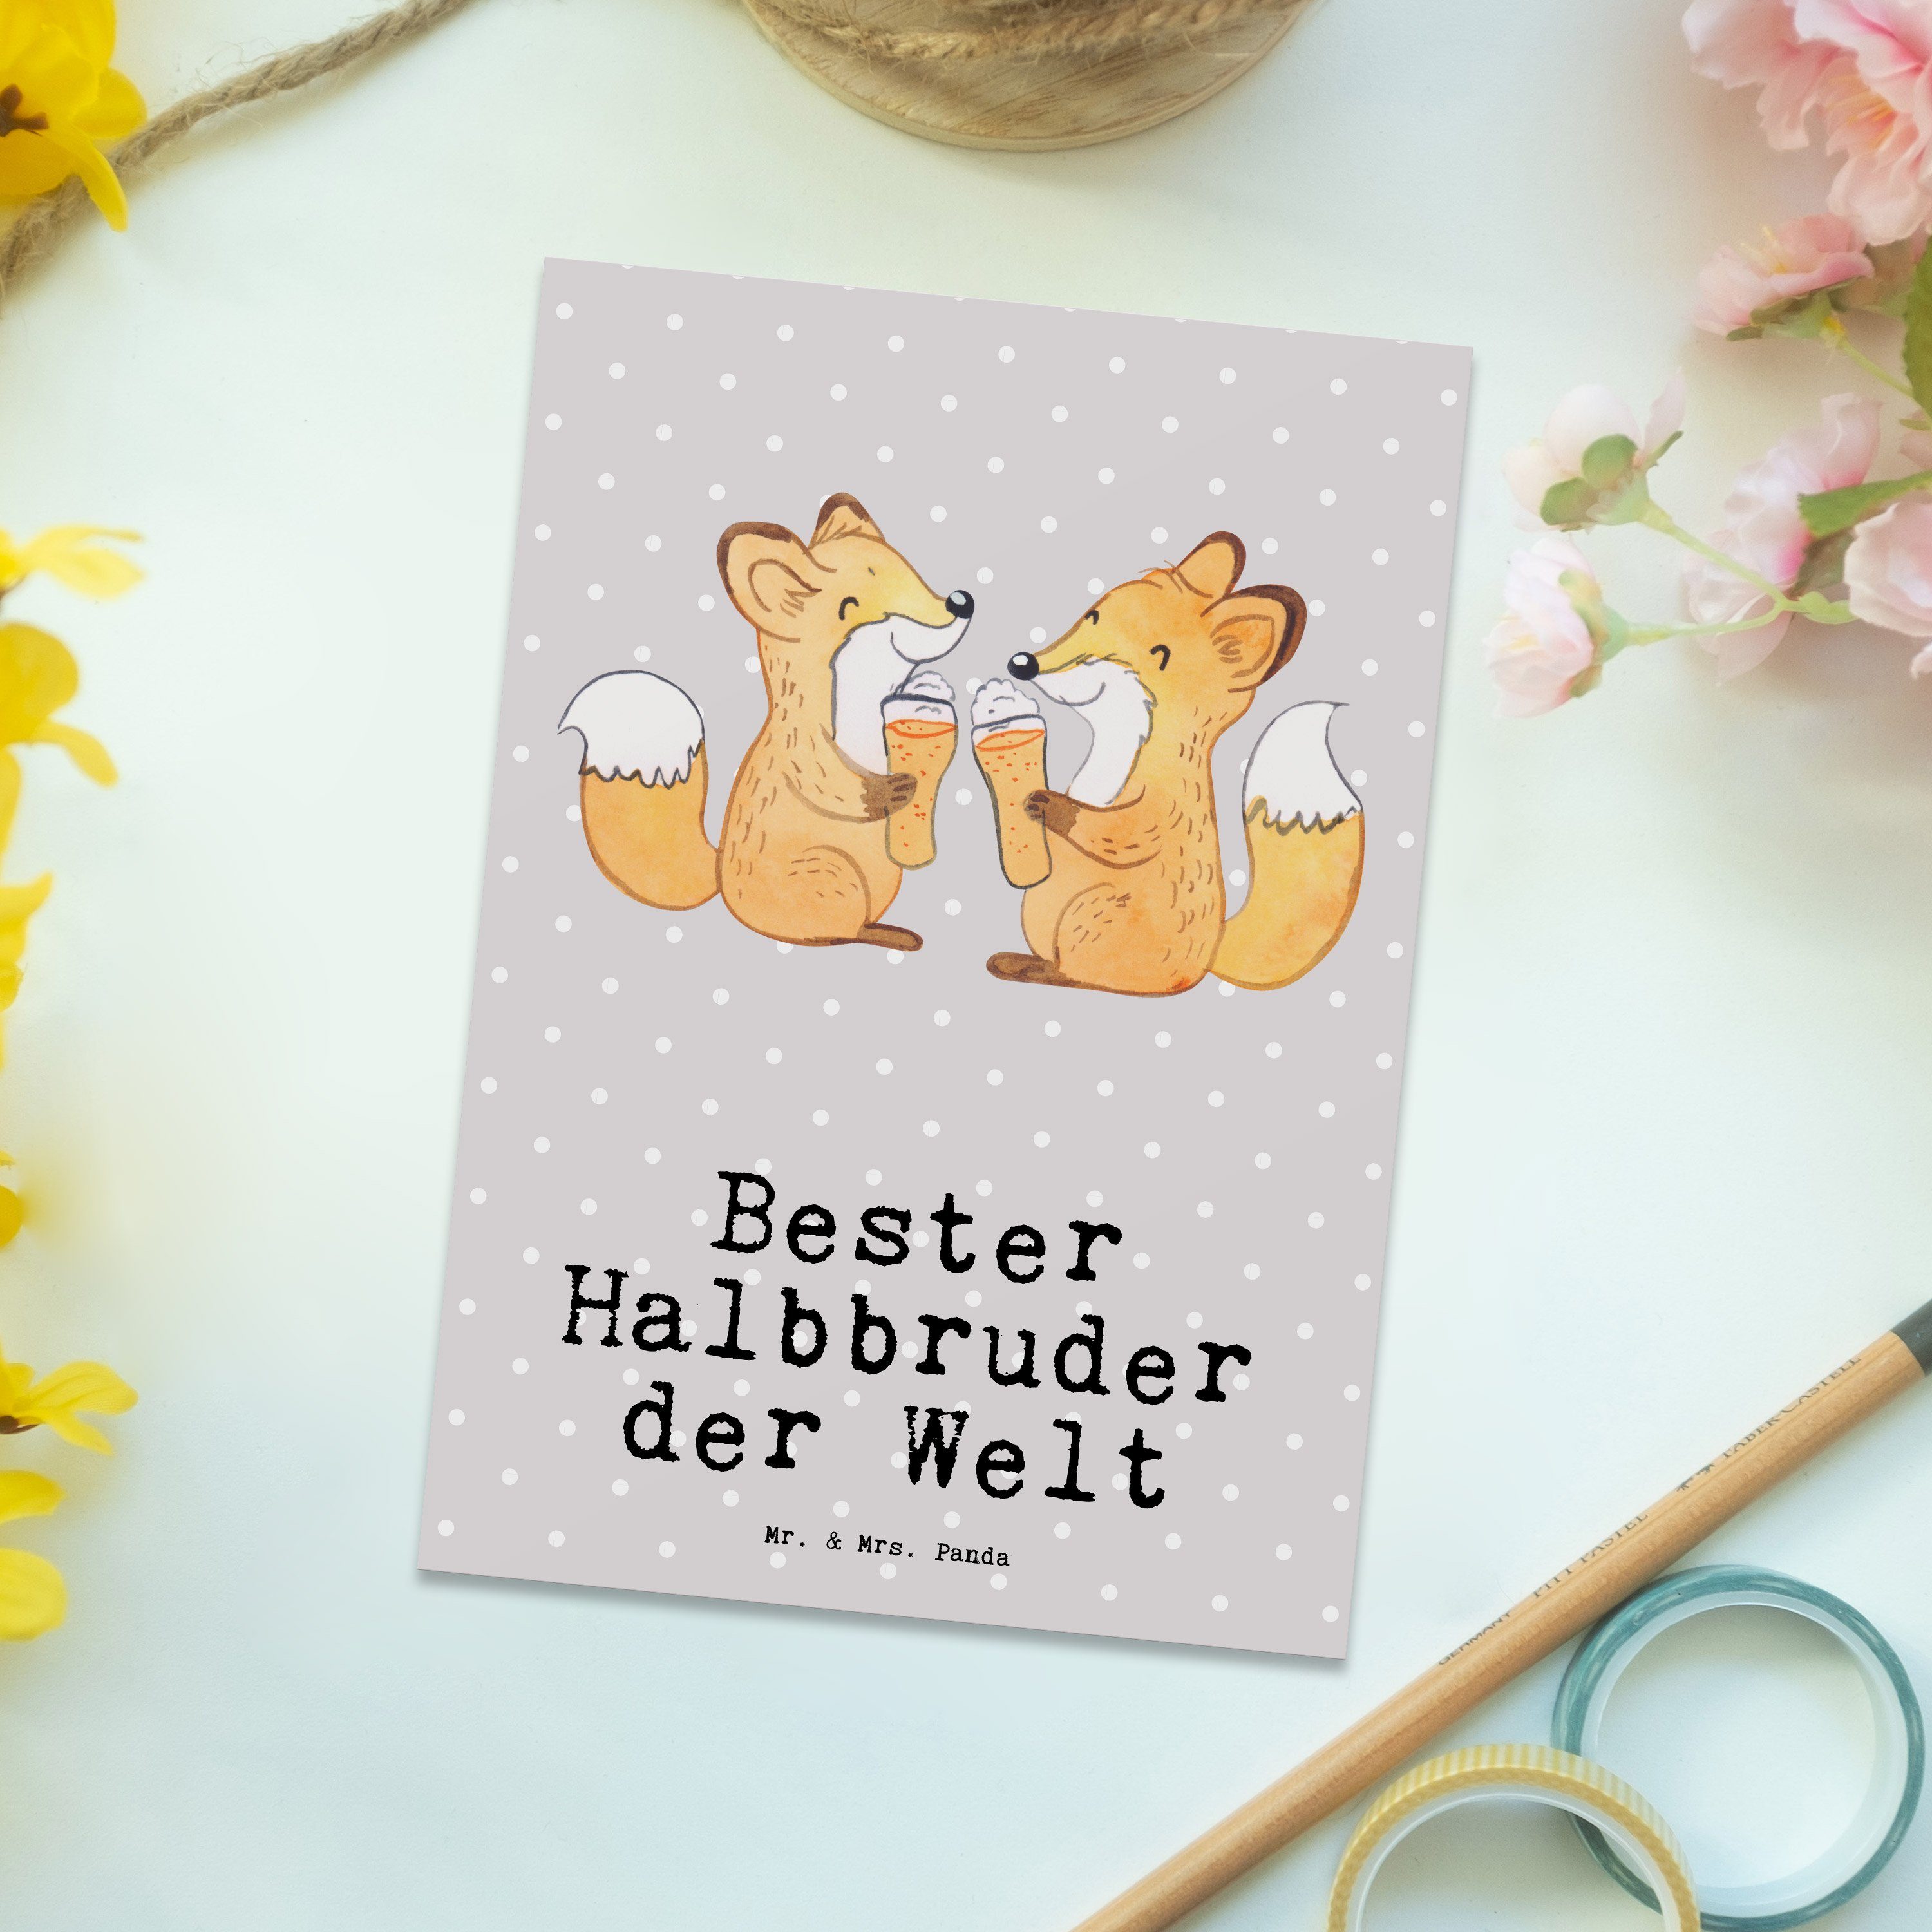 Mr. & Mrs. Panda Postkarte Geschenk, Fuchs Dankeskar Bester Pastell - der Grau - Halbbruder Welt